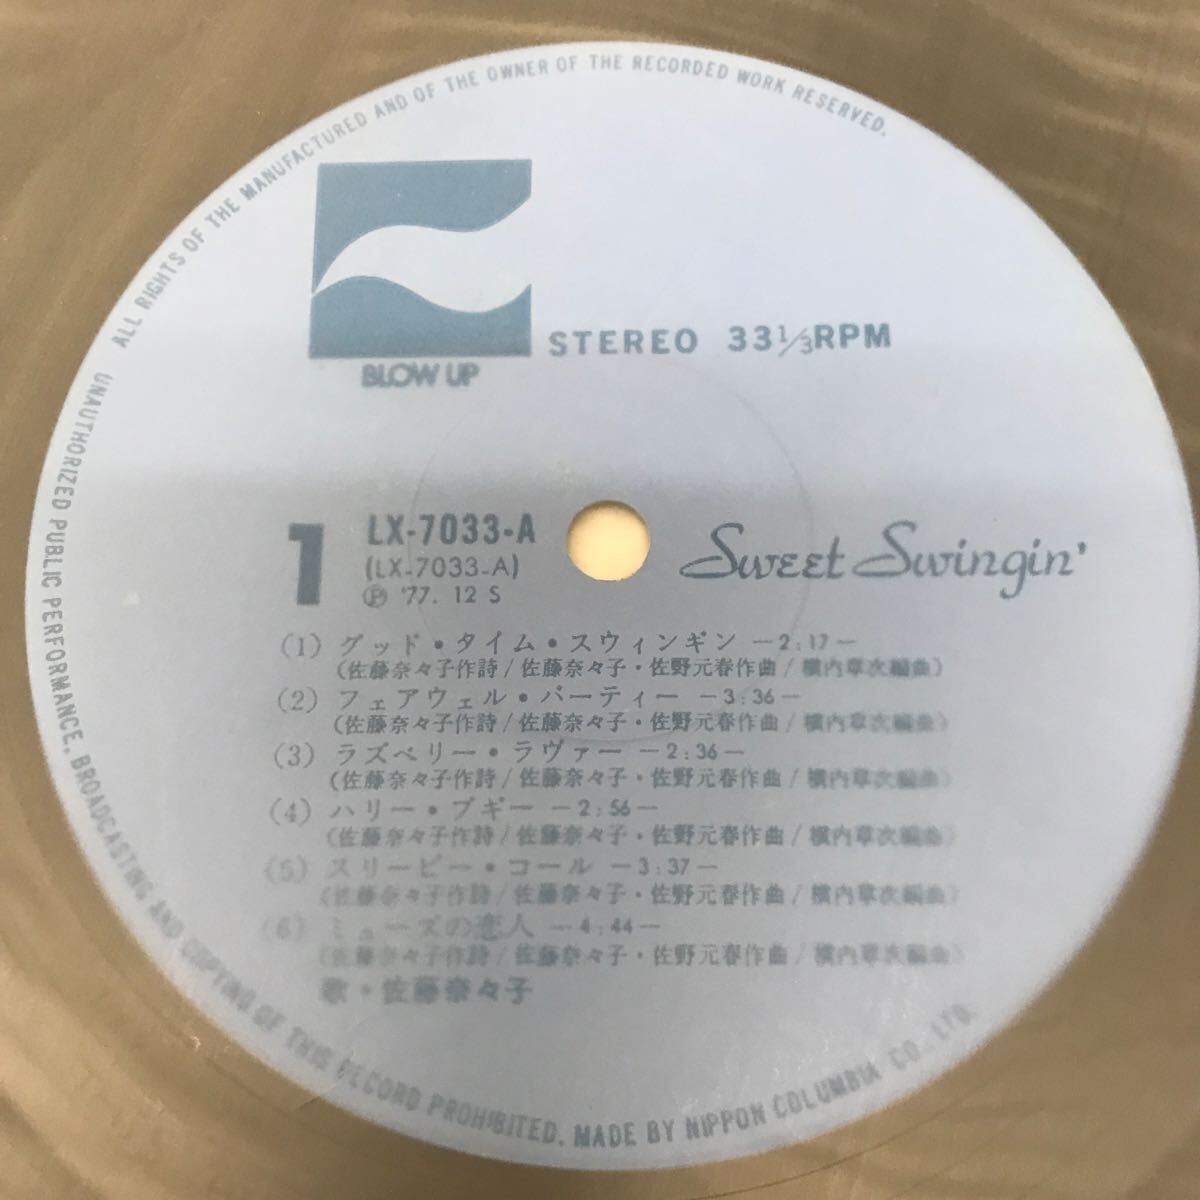 I0516A3 佐藤奈々子 Nanako Sato Sweet Swingin' LP レコード 音楽 邦楽 国内盤 LX-7033 コロムビア Columbia グッドタイムスウィンギン 他_画像5